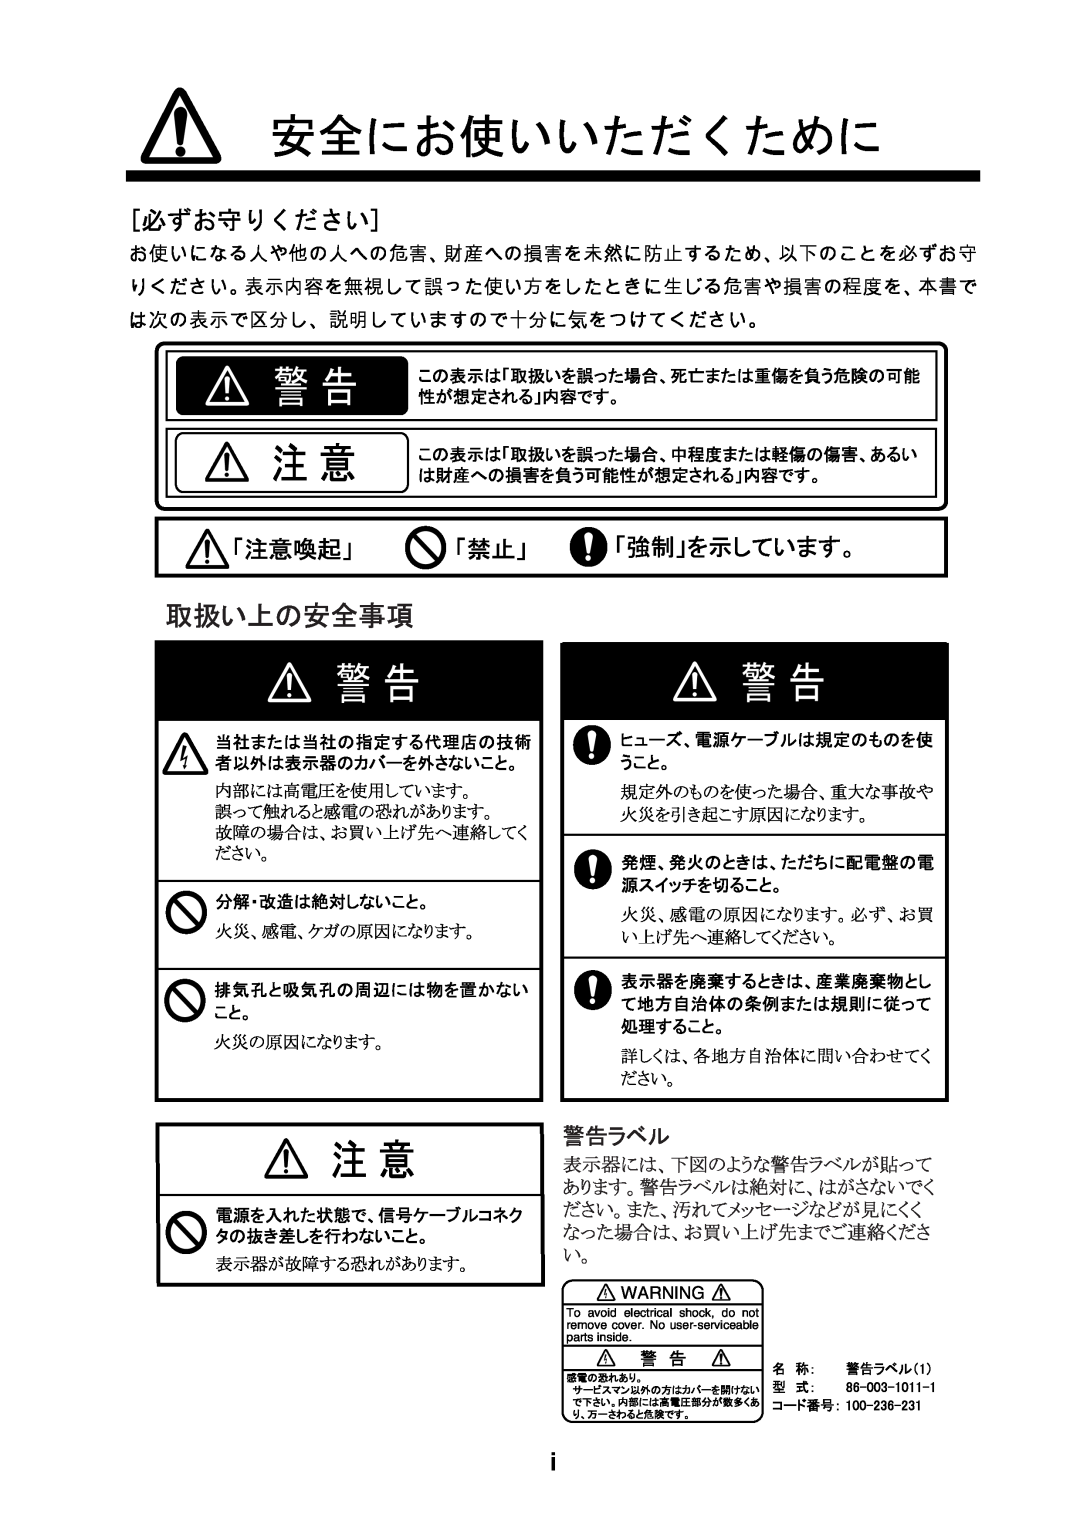 Furuno MU-170C manual 安全にお使いいただくために, 必ずお守りください 